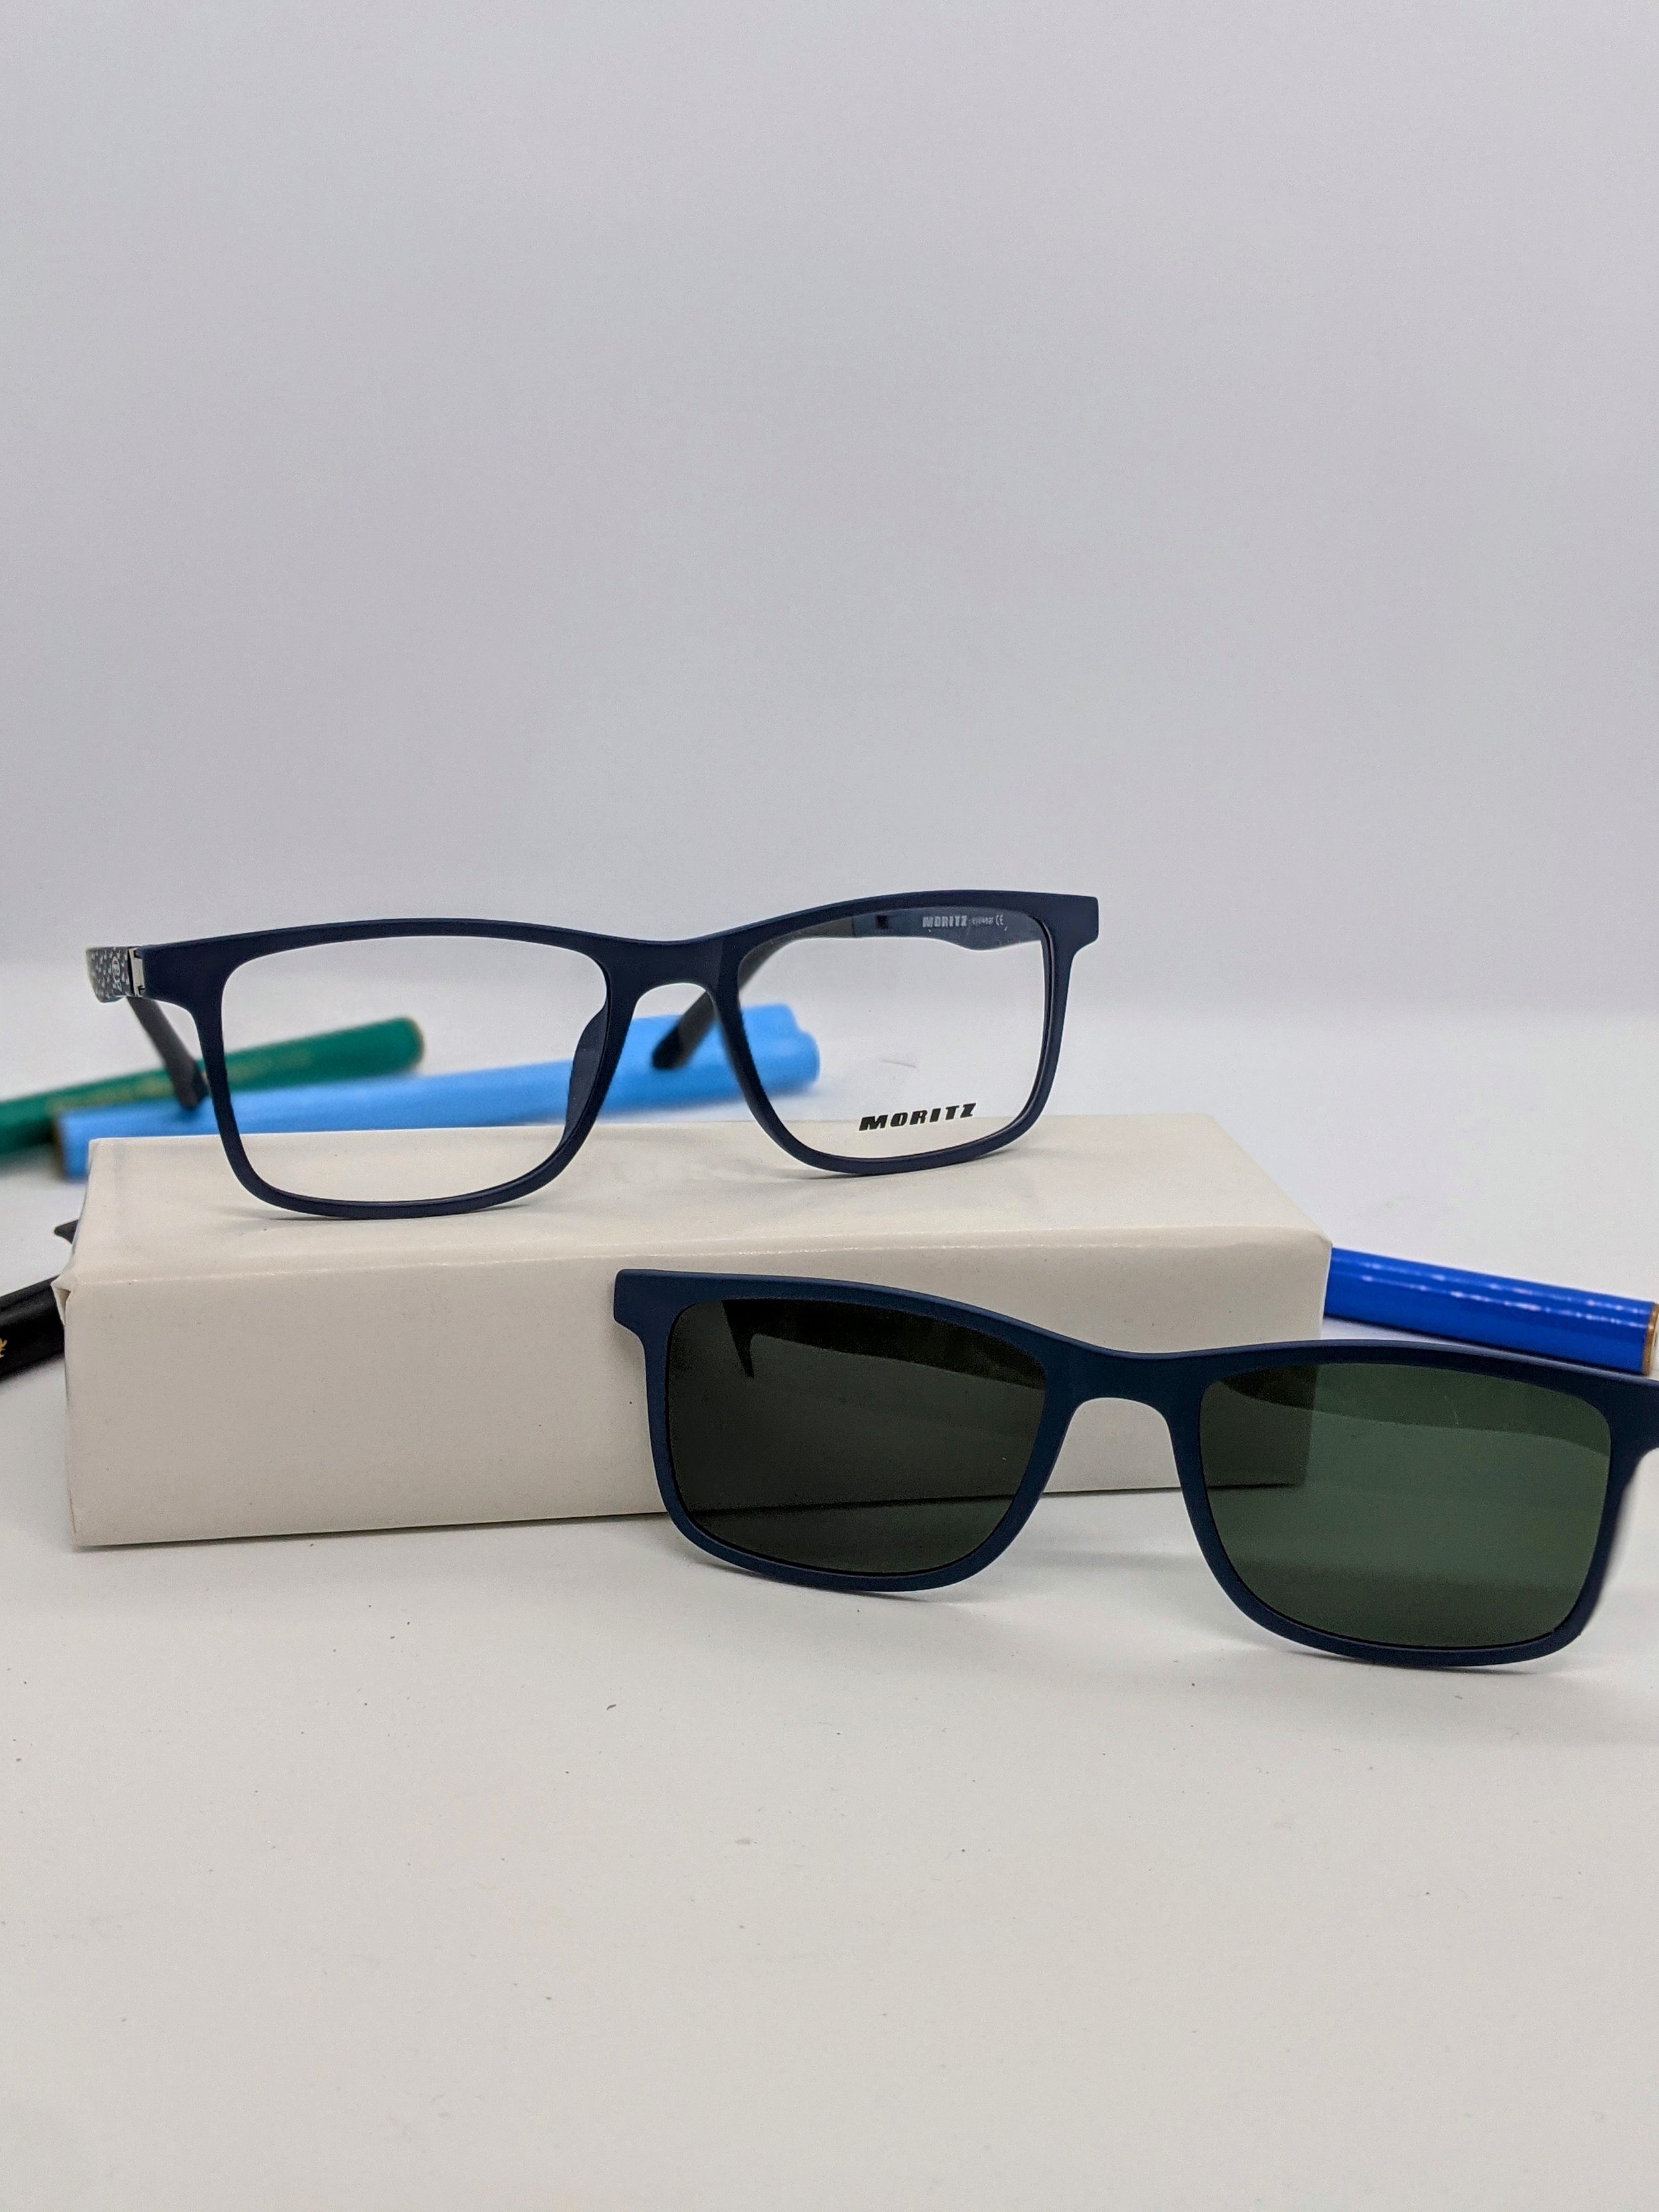 Nova Optical Newcastle Opticians Kids Glasses School Frames Childrens Sunglasses.jpg